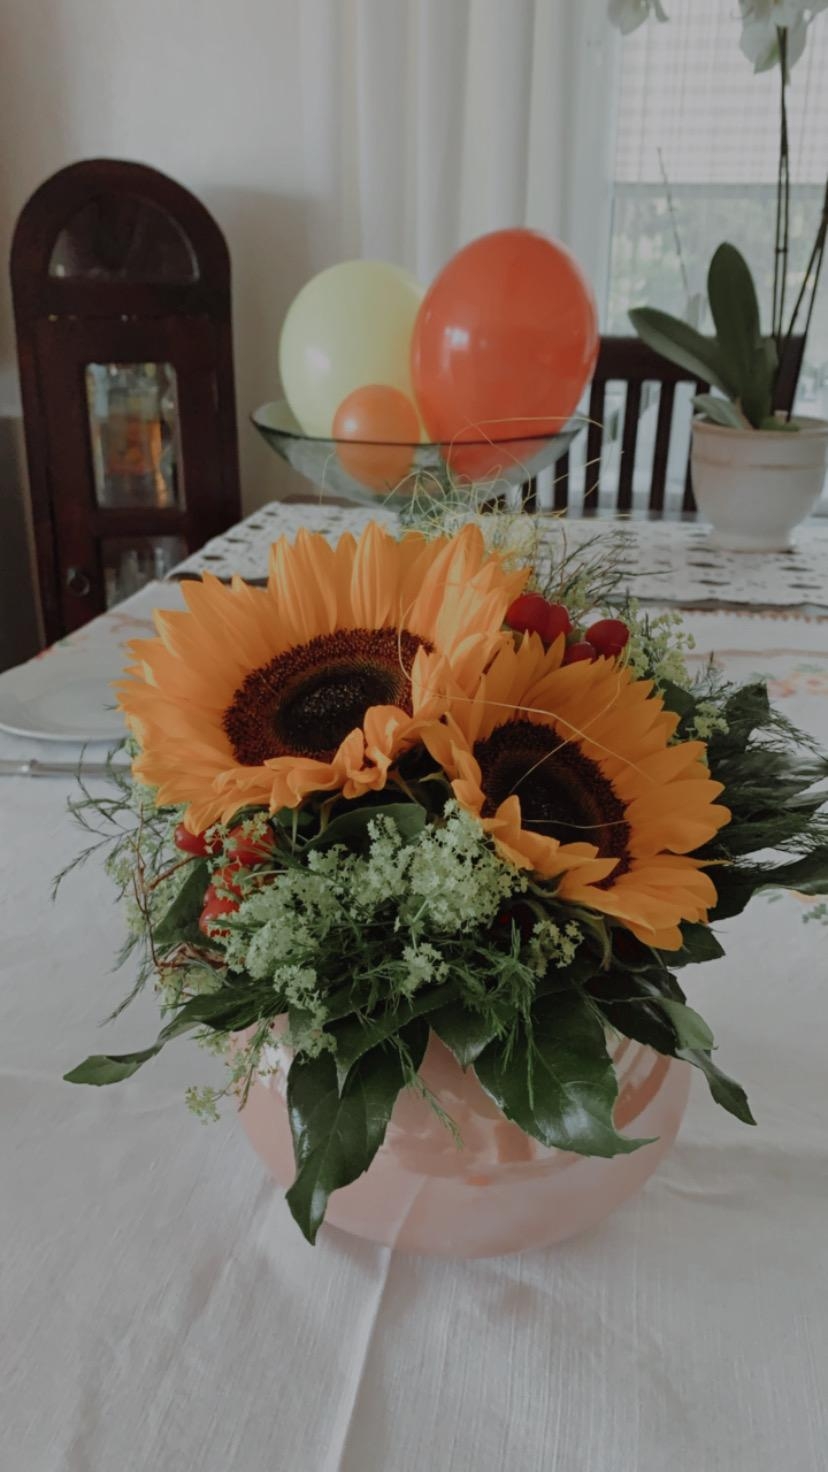 Lieblingsblume= Sonnenblume 🌻💛
#freshflowerfriday #sonnenblume